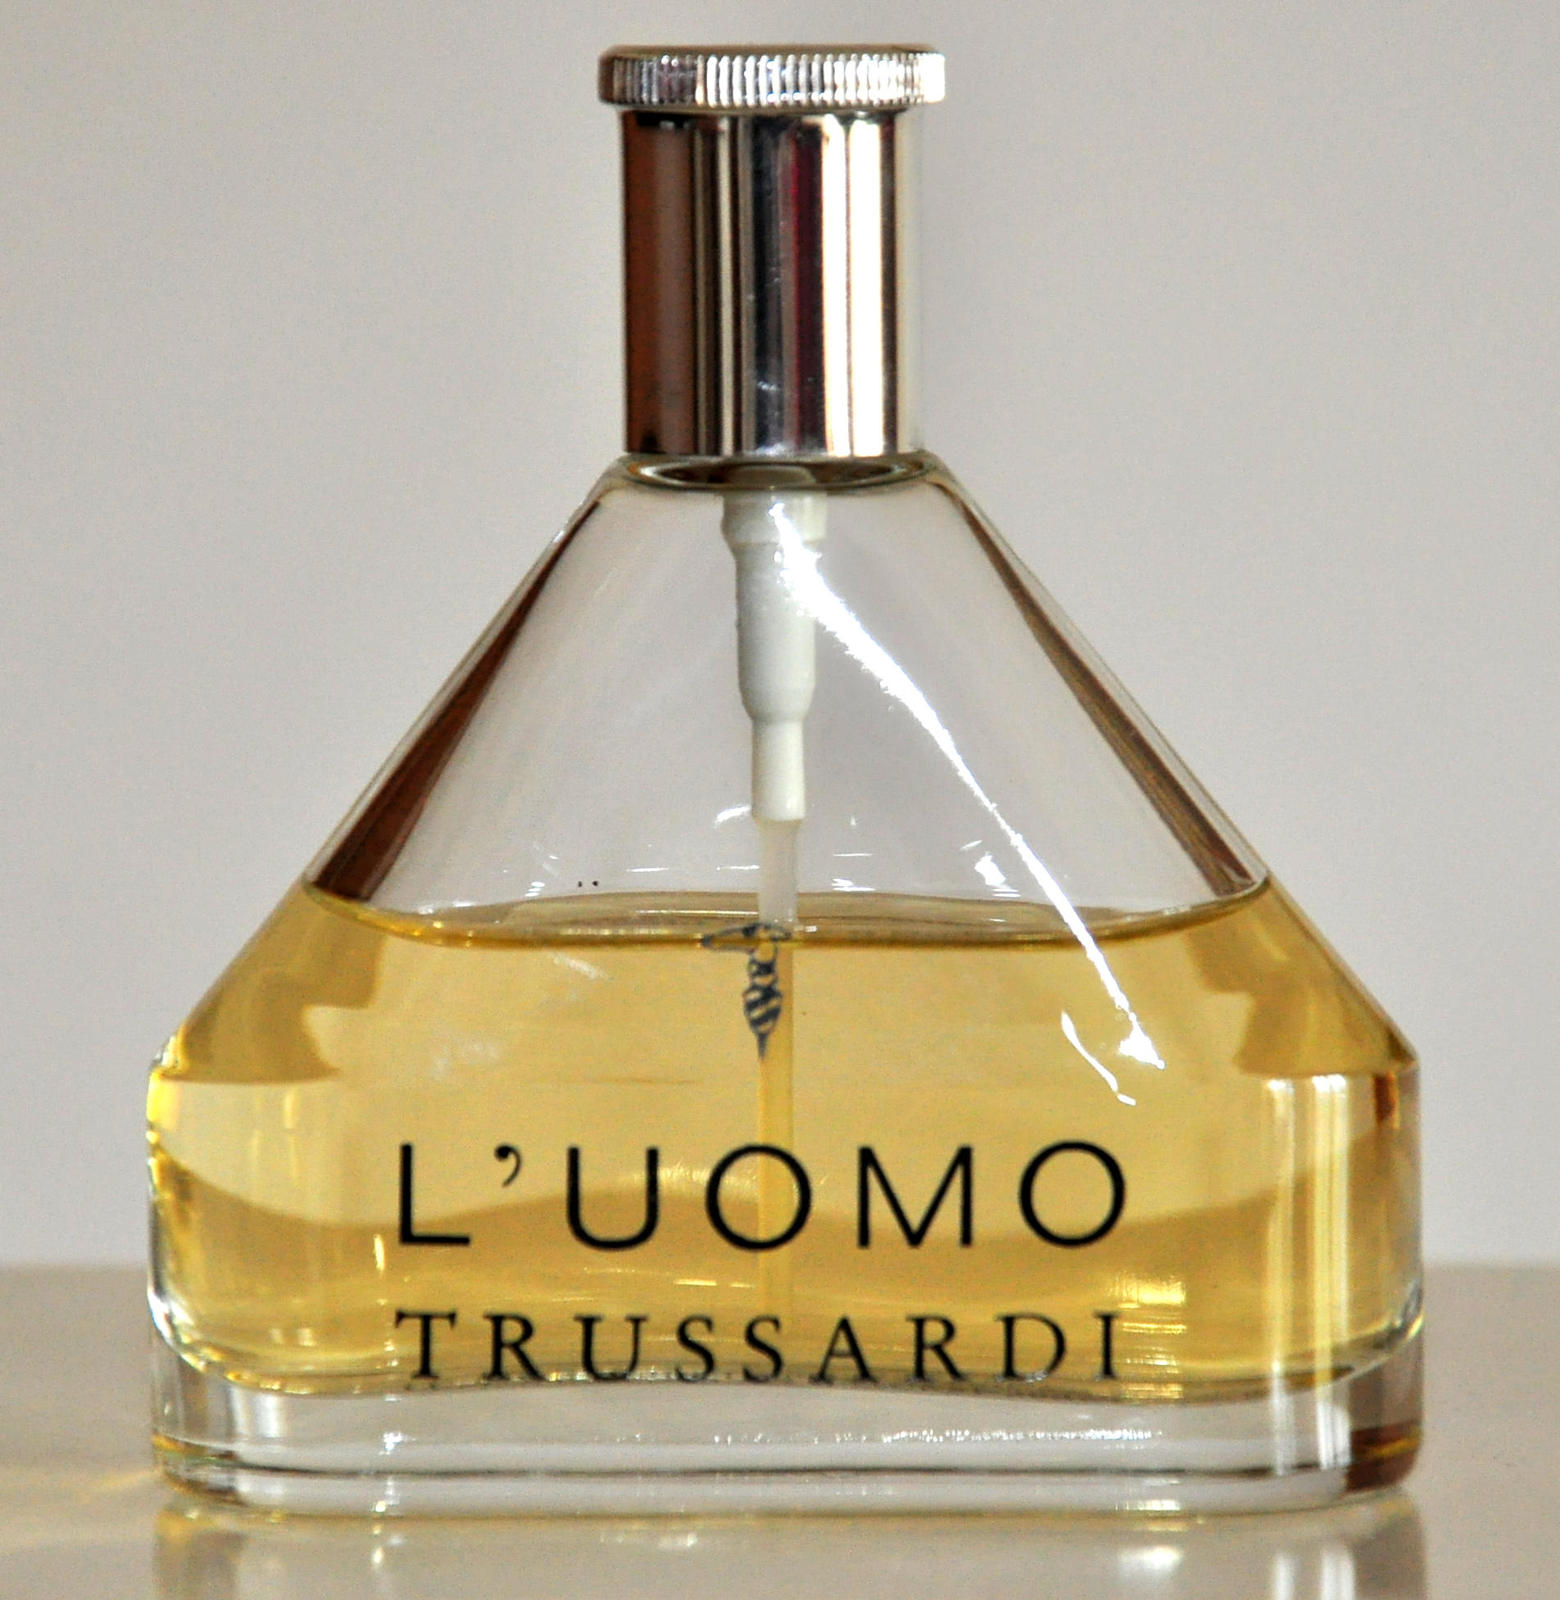 Primary image for Trussardi L'Uomo Eau de Toilette Edt 100ml 3.4 Fl. Oz. Perfume for Men Rare 1995